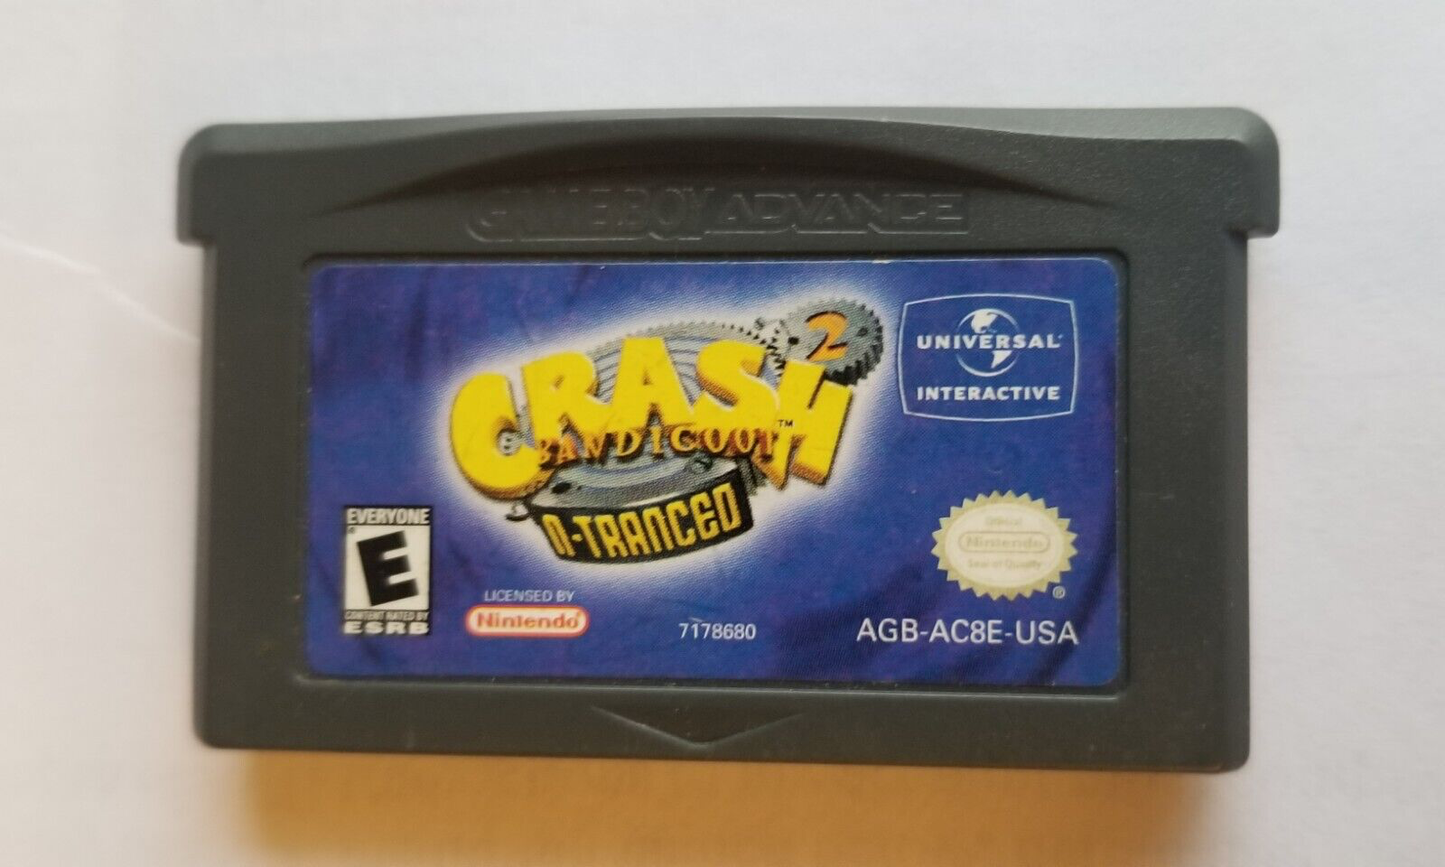 Crash Bandicoot 2 N-tranced - Game Boy Advance